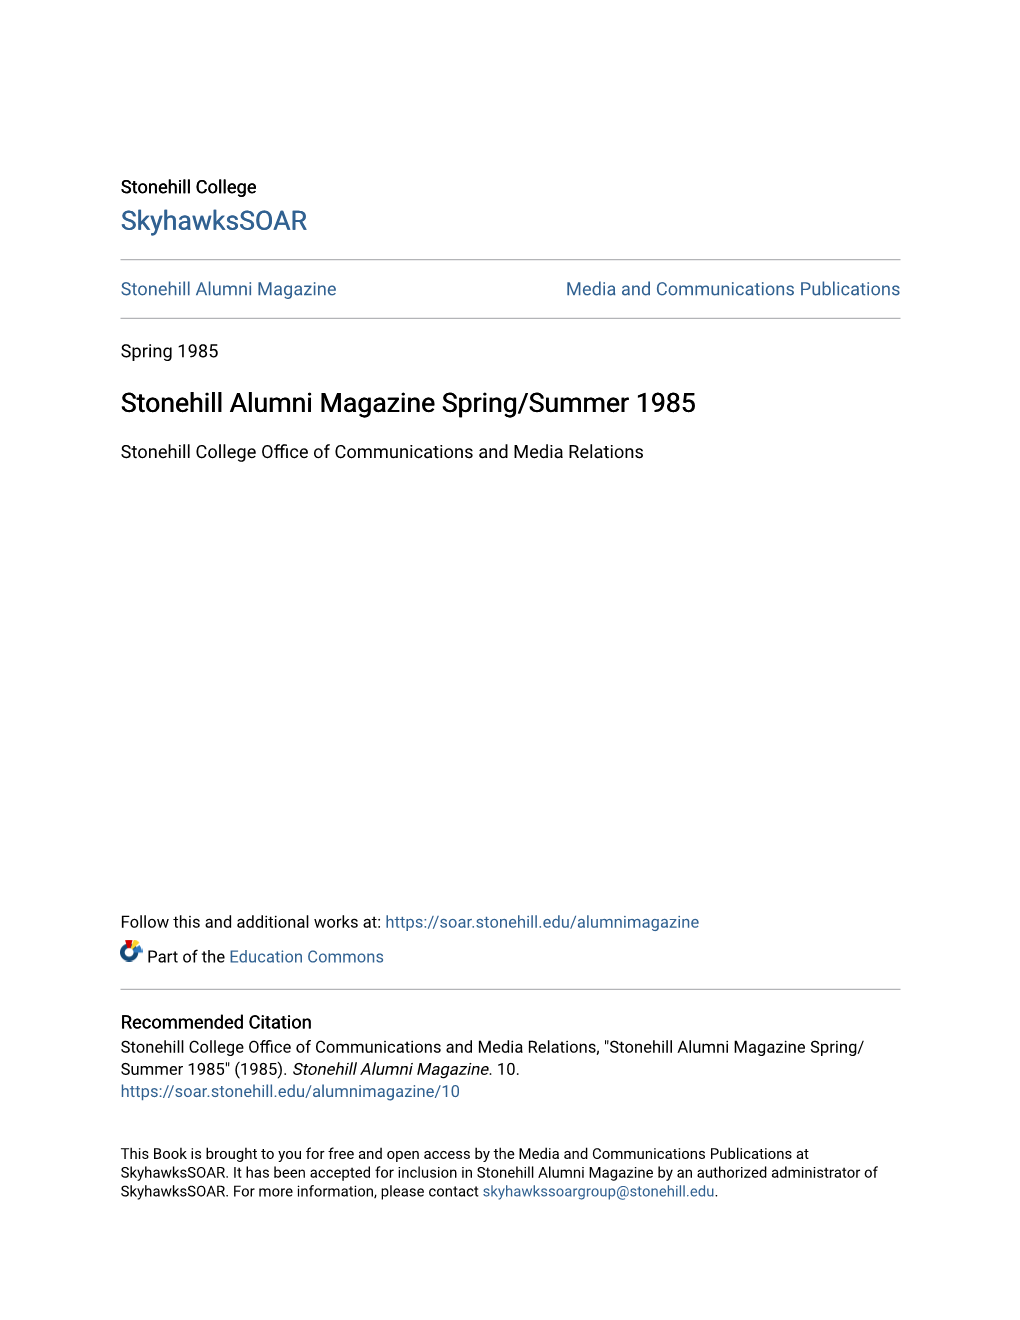 Stonehill Alumni Magazine Spring/Summer 1985